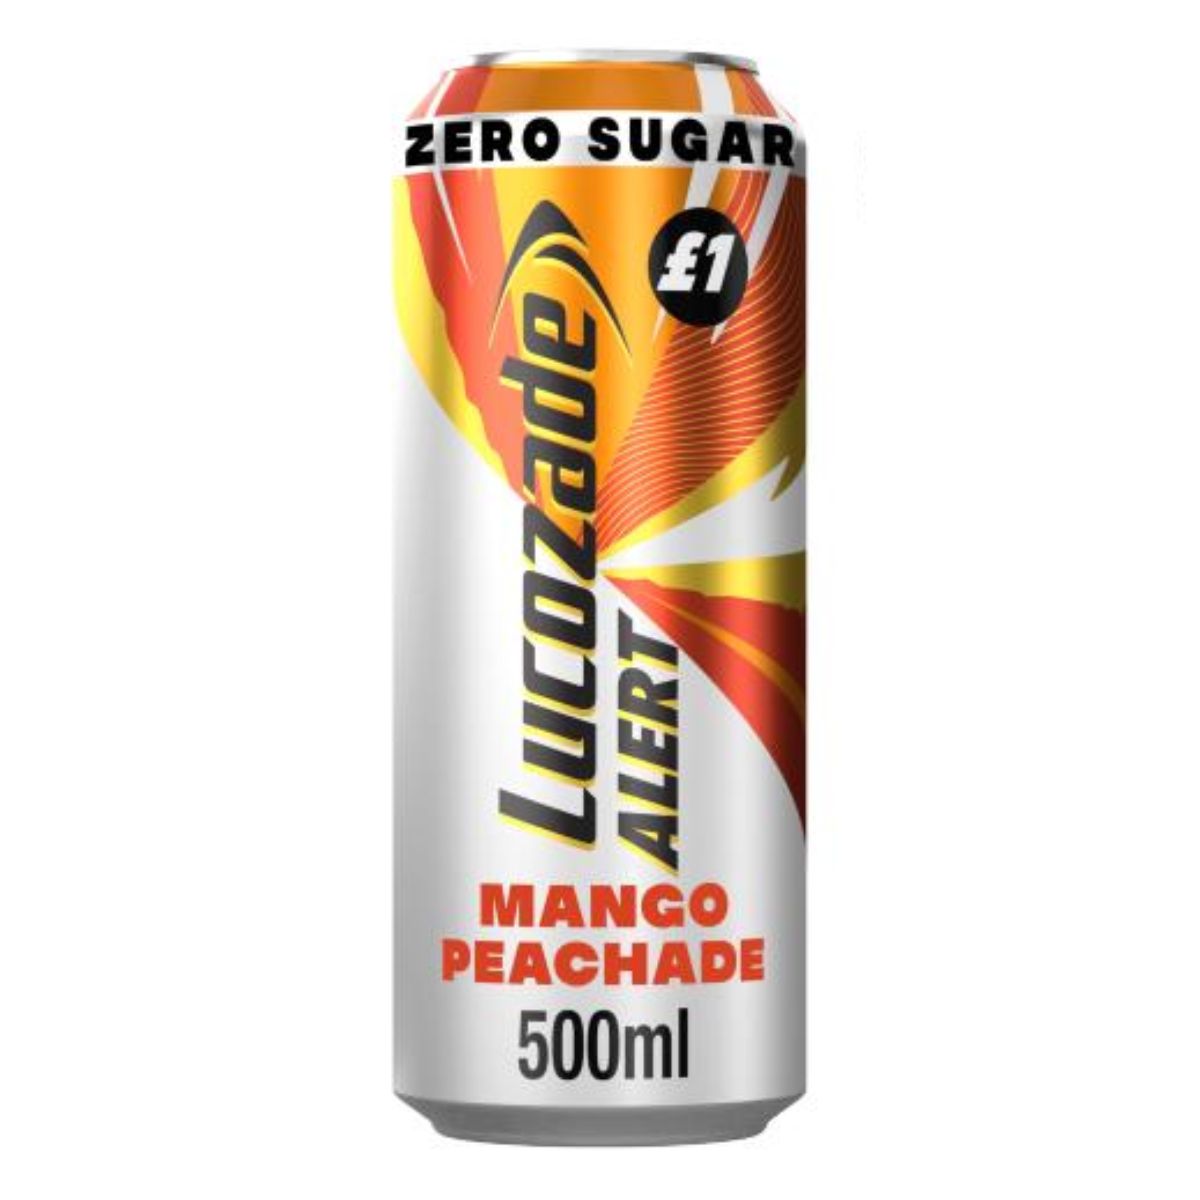 A can of Lucozade Alert - Zero Mango & Peach Caffeine Energy Drink - 500ml.